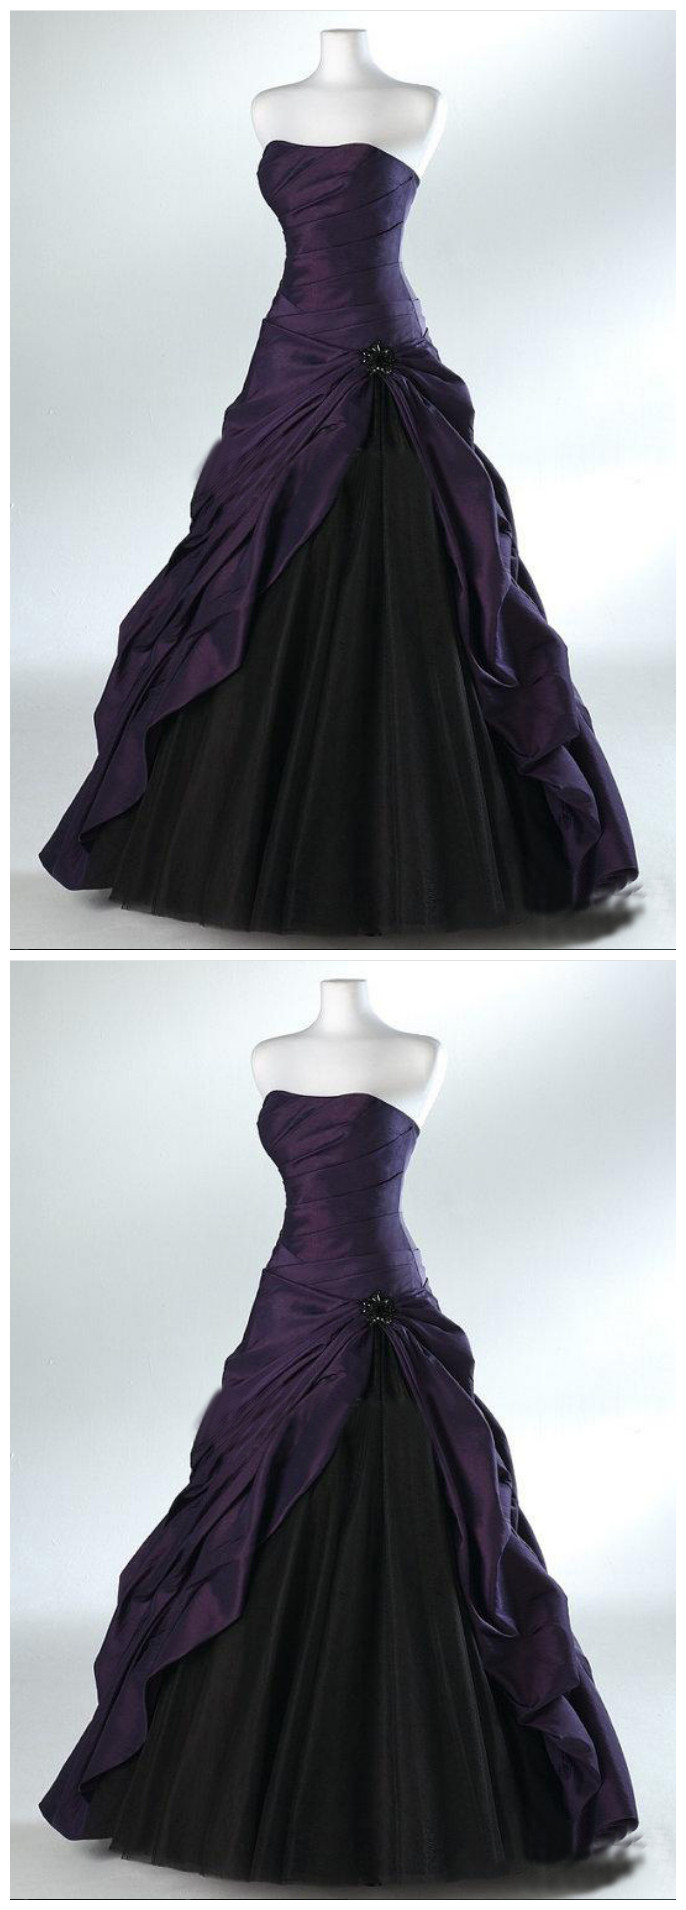 Robe De Mariage Halloween Ball Gown Backless Strapless Distinctive Bridal Skirt Gothic Purple And Black Wedding Dresse